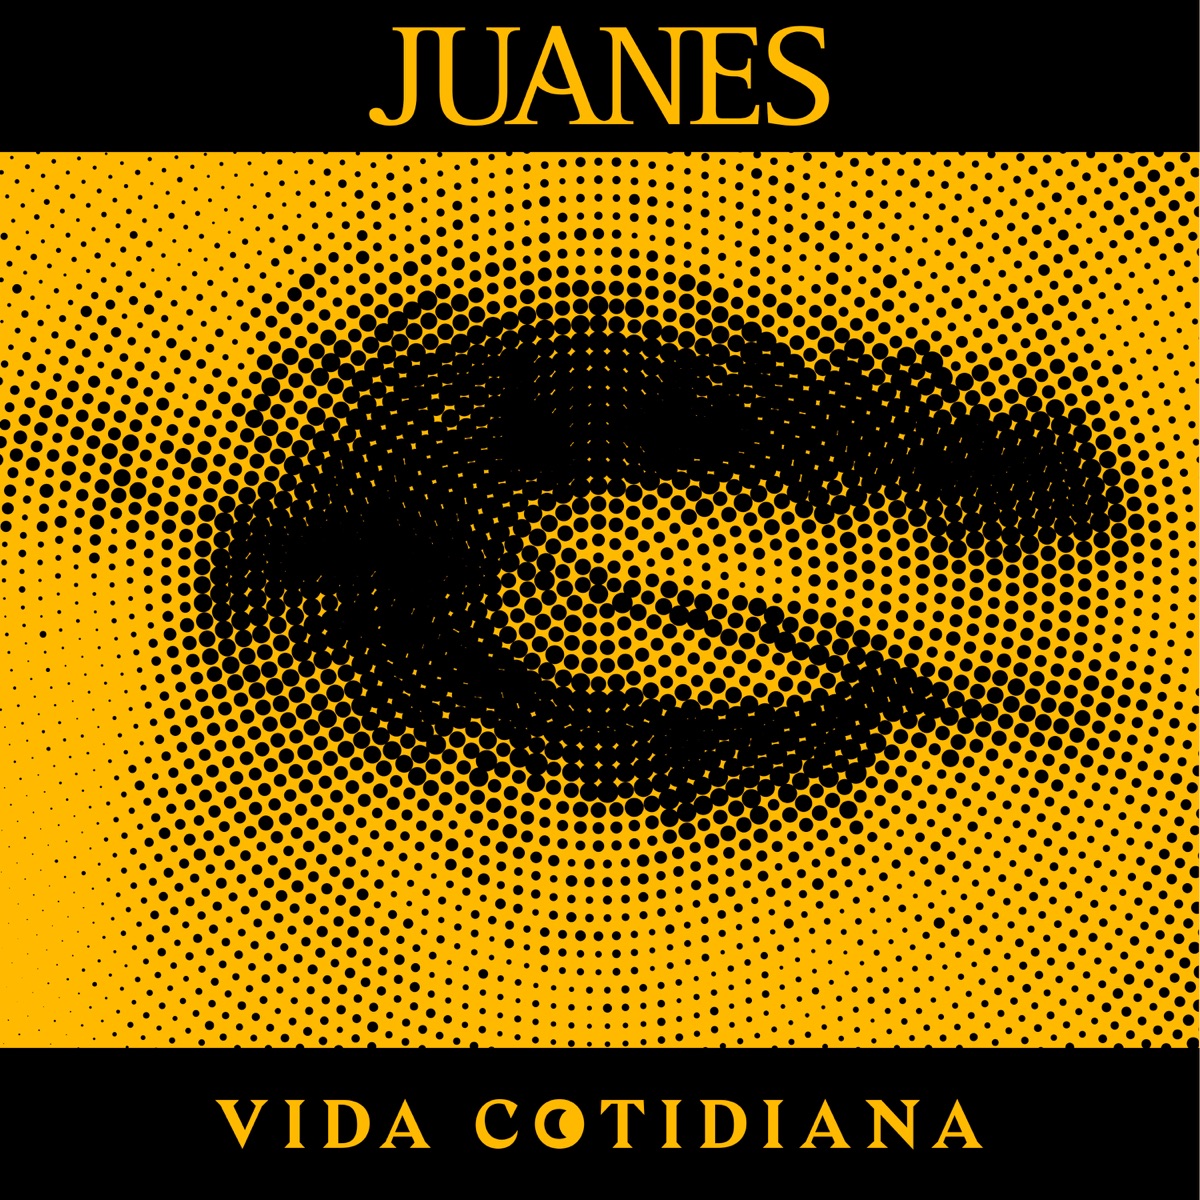 Juanes Vida Cotidiana cover artwork